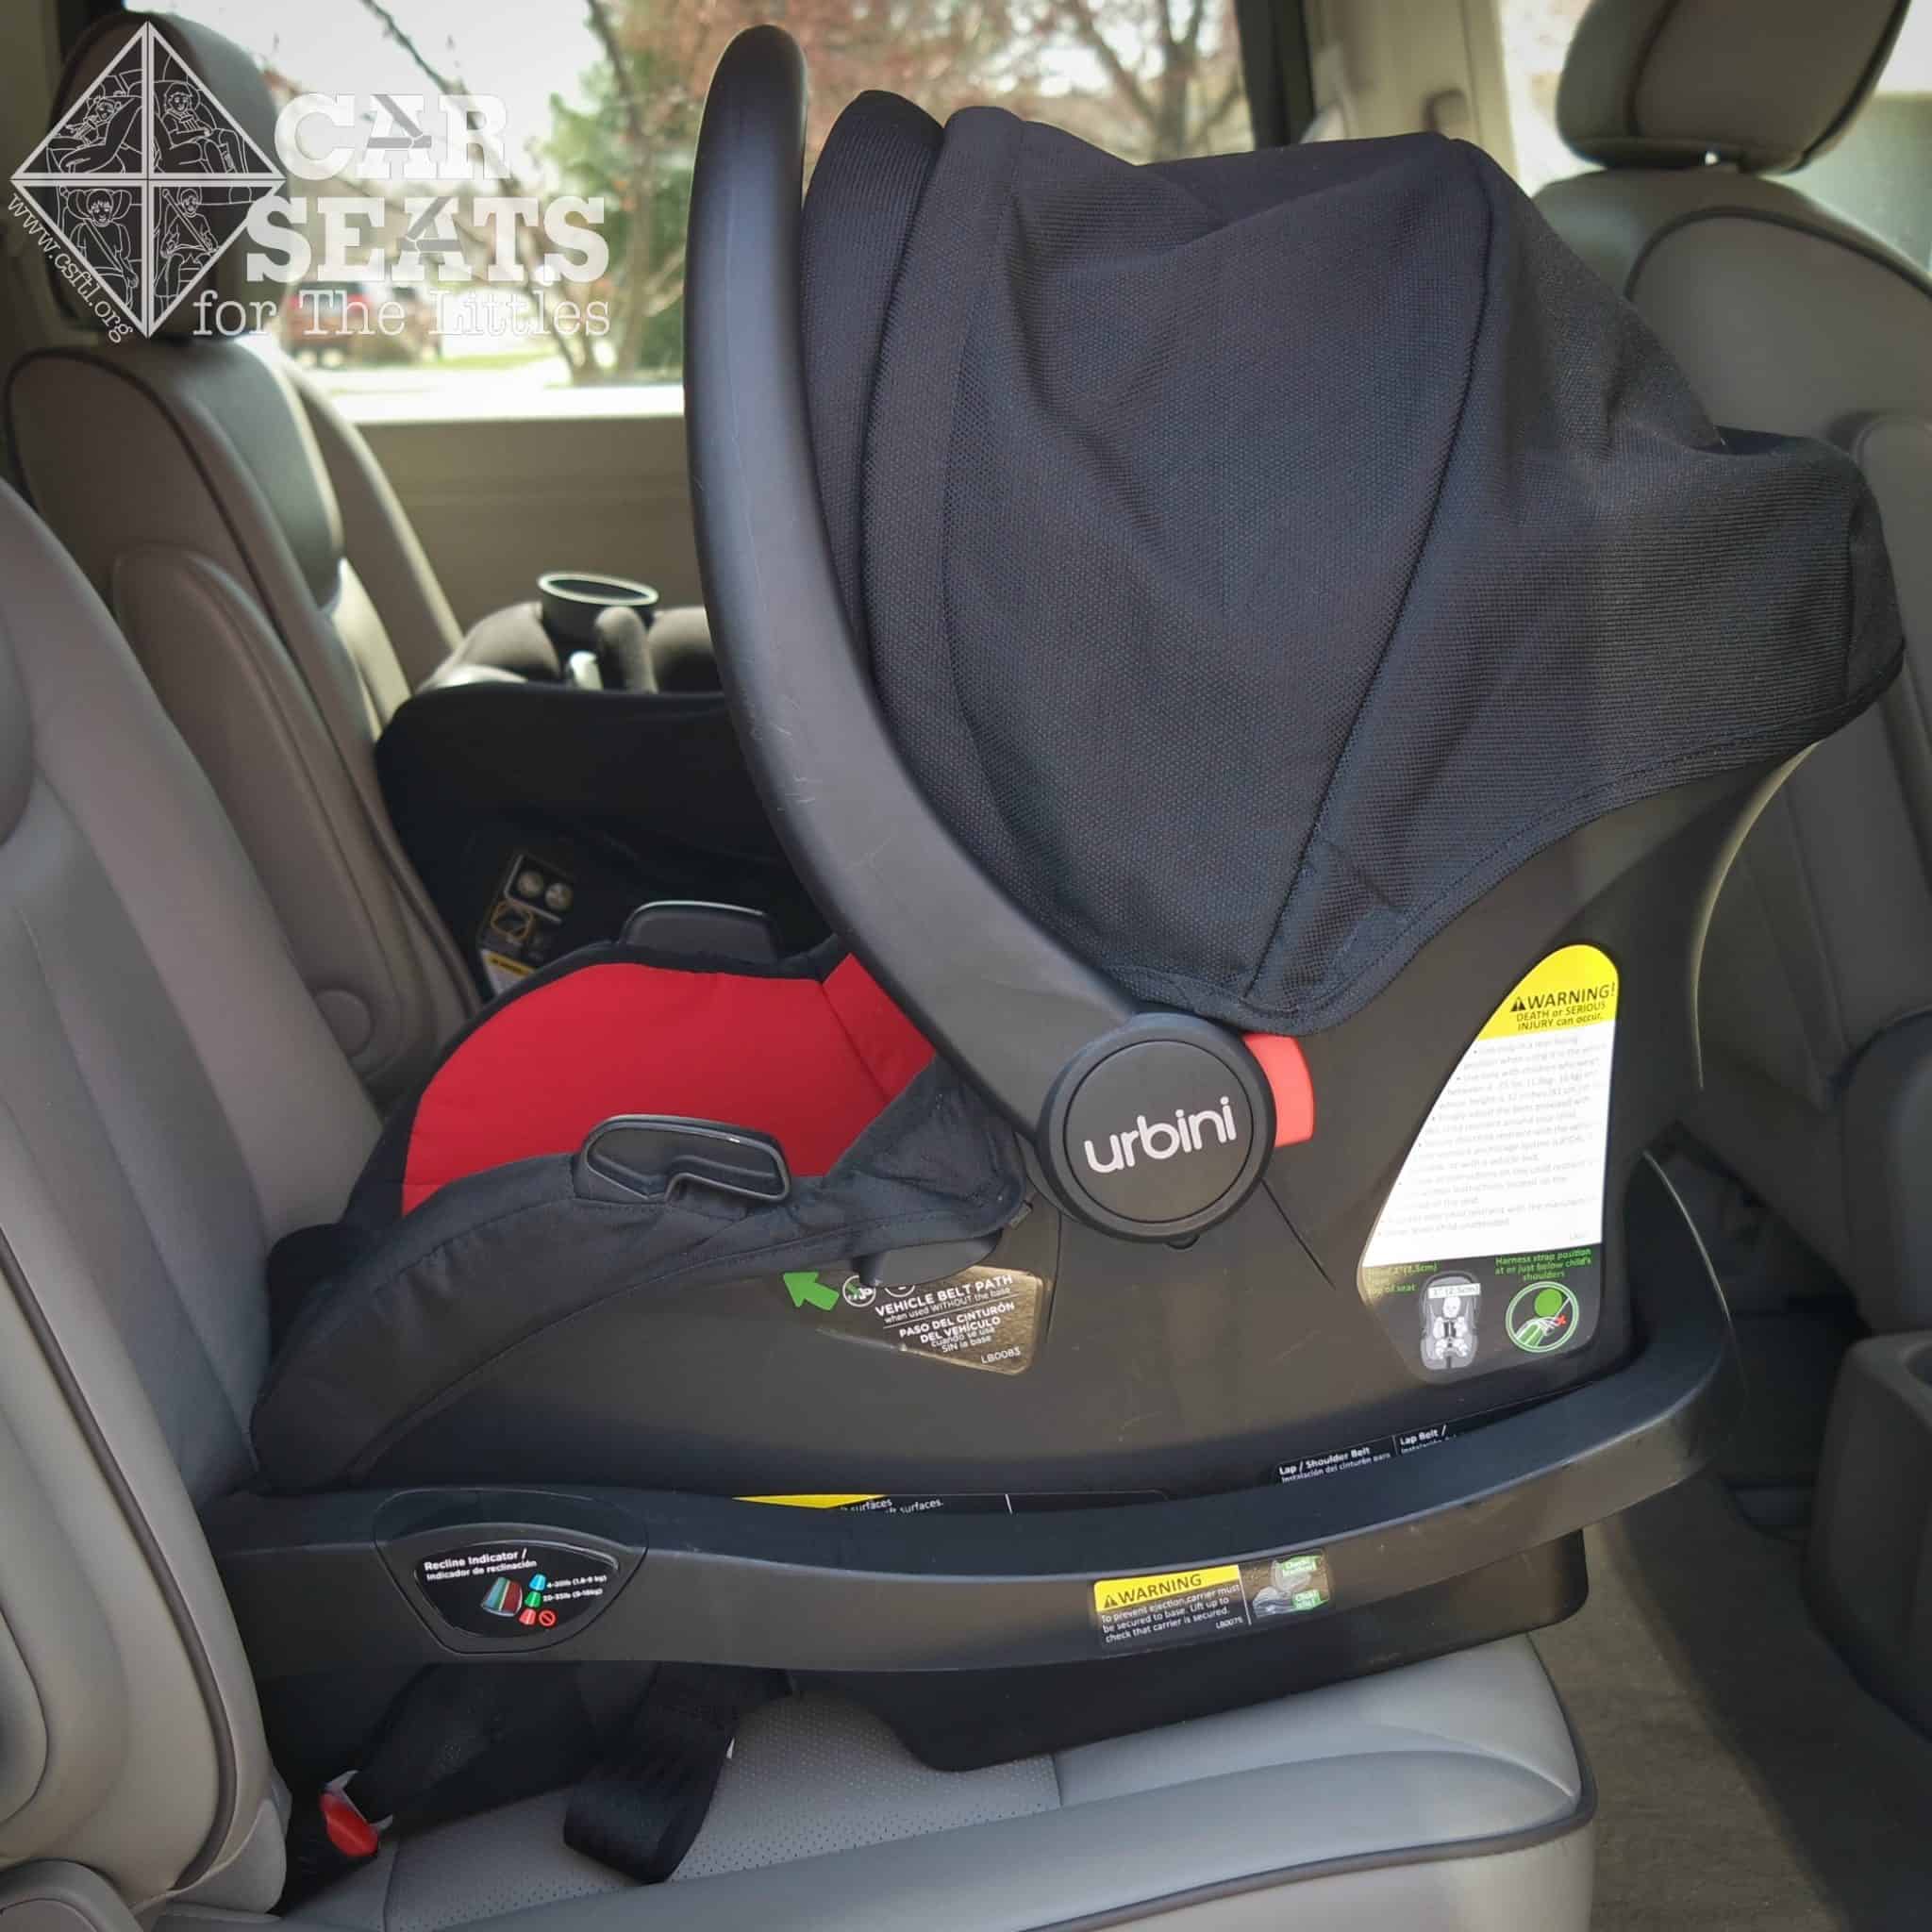 black urbini car seat